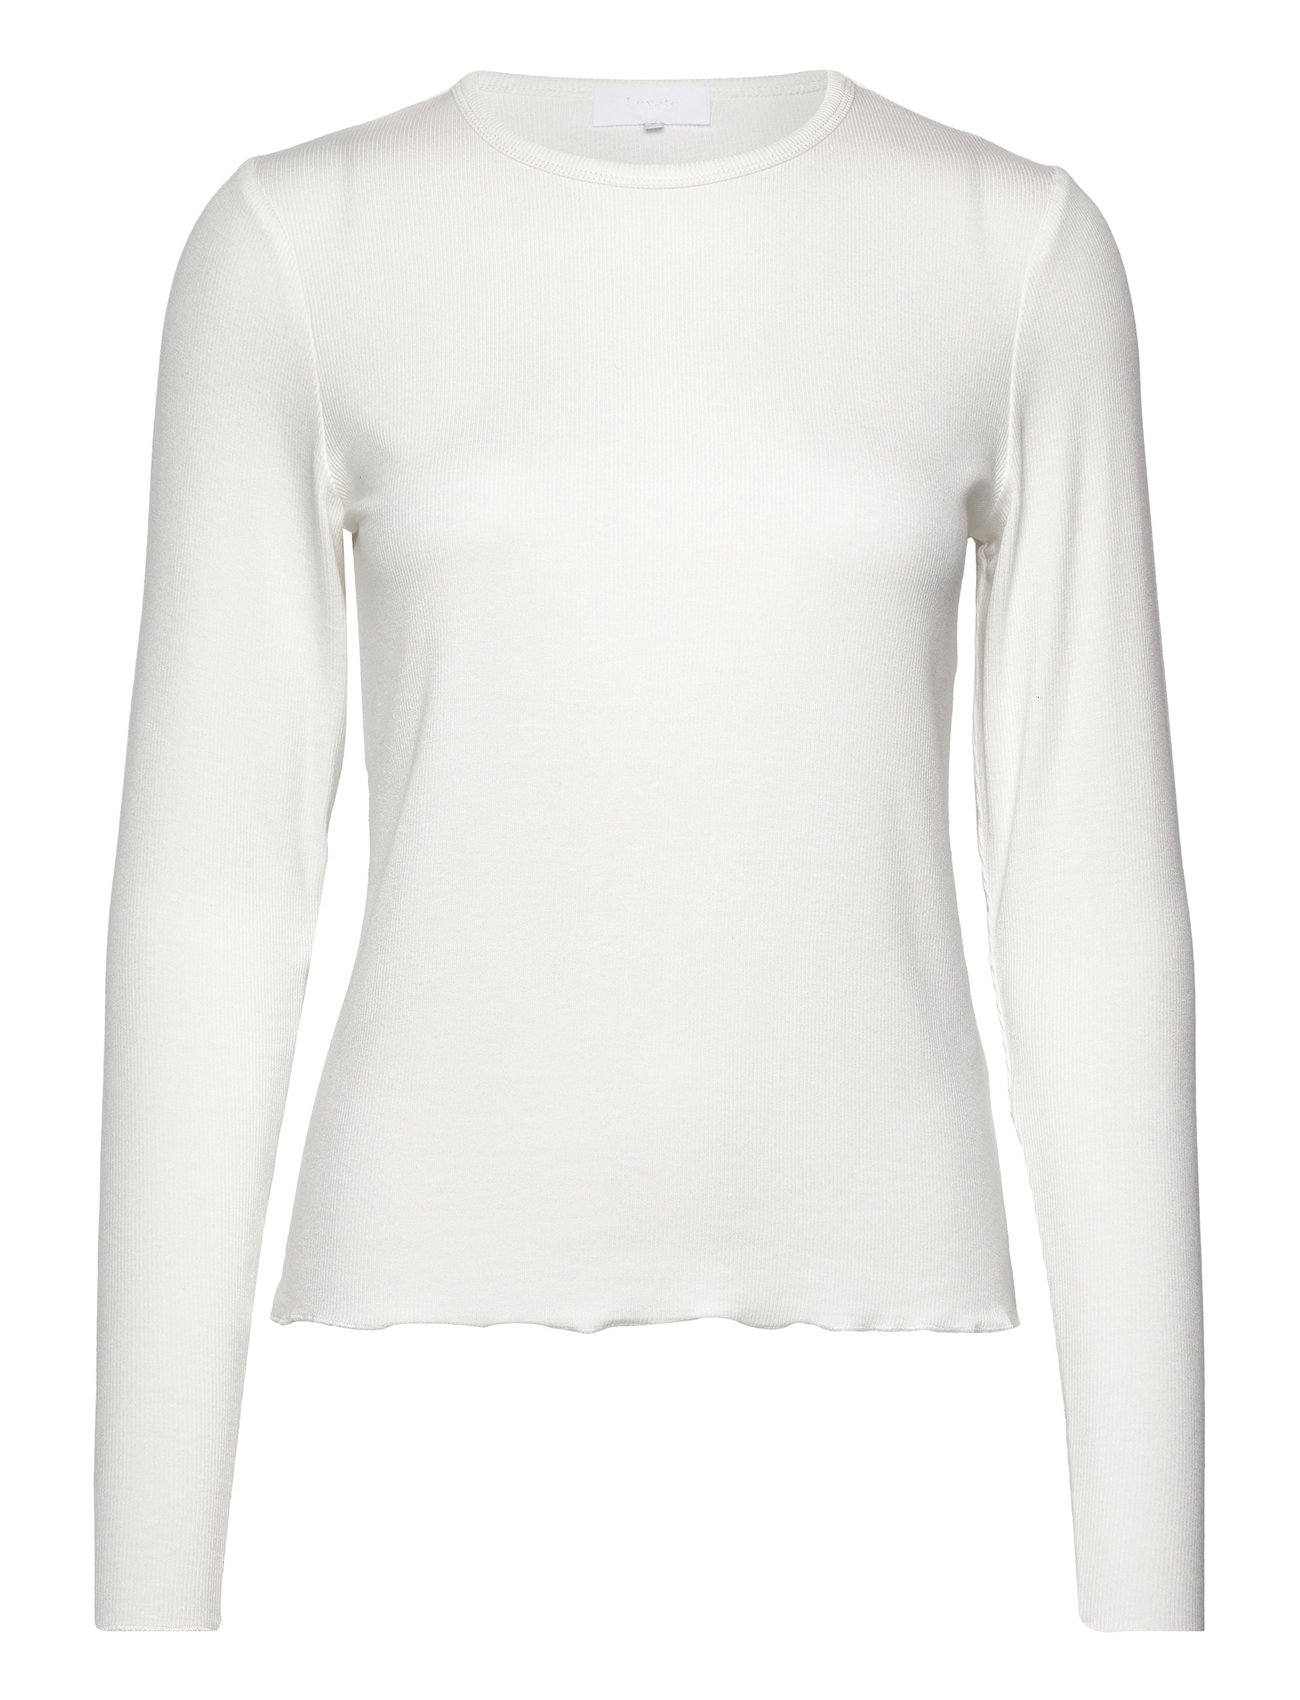 Lr-Ika Tops T-shirts & Tops Long-sleeved White Levete Room